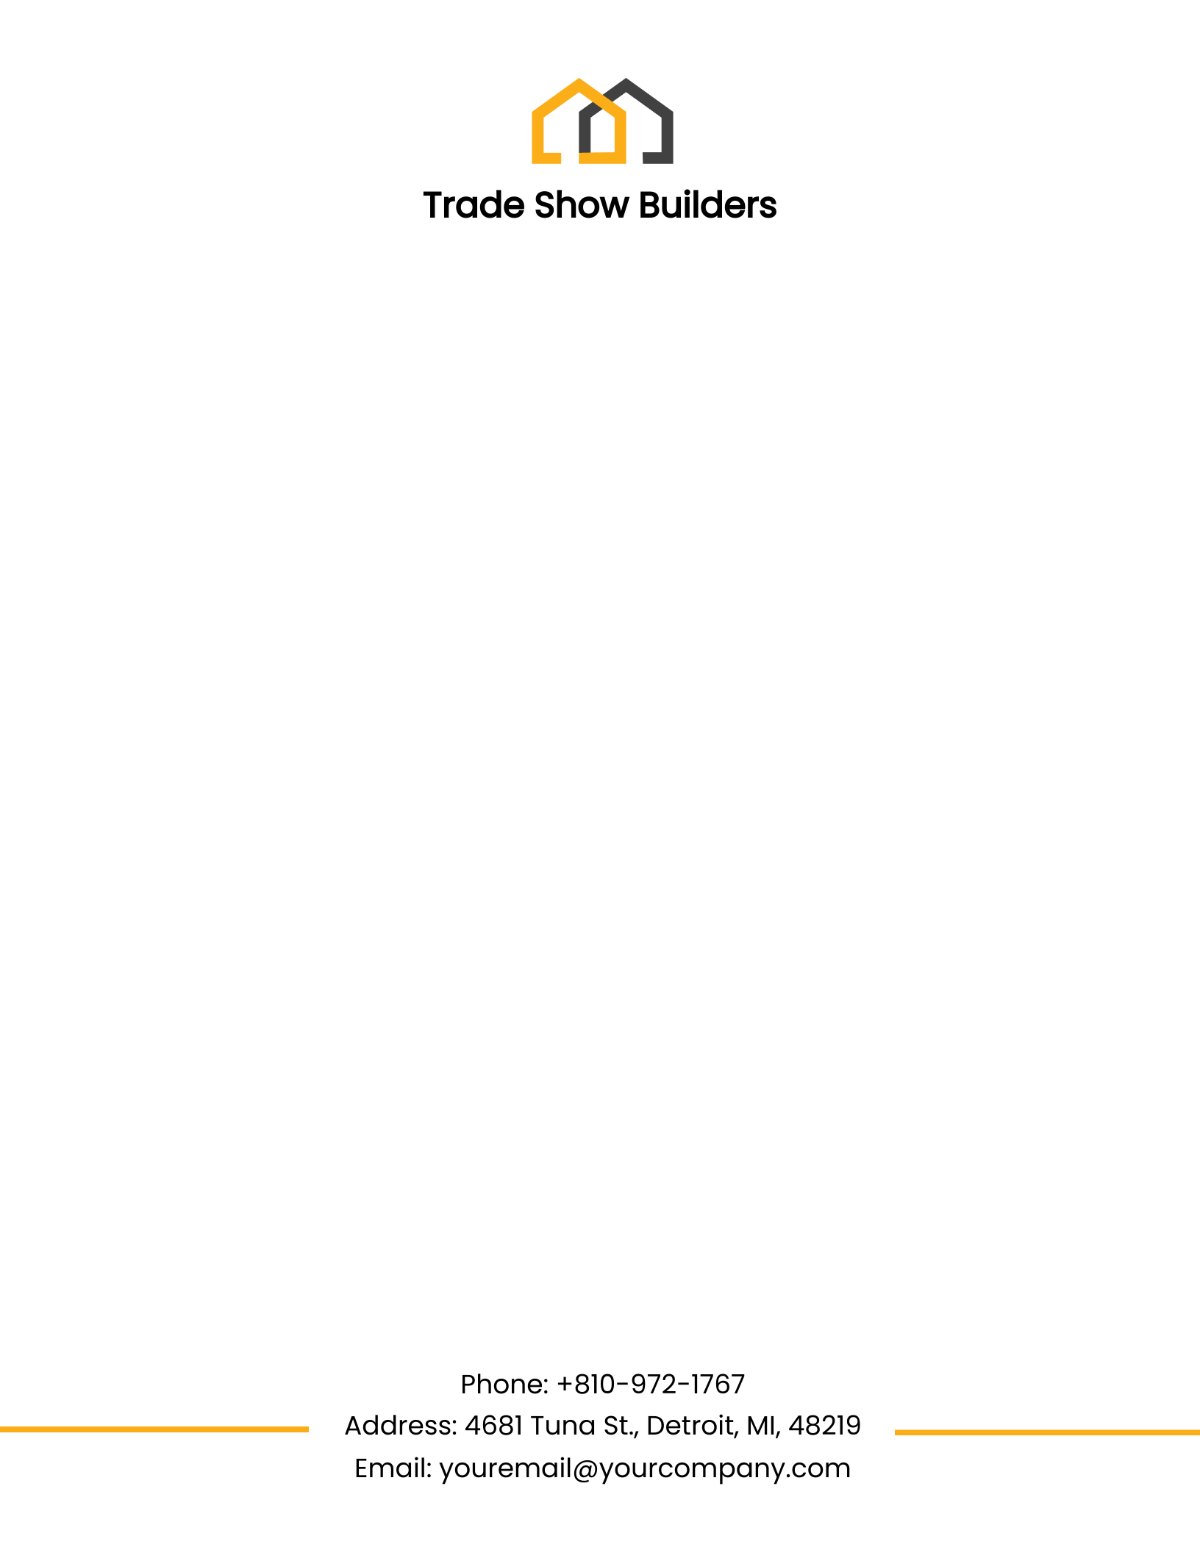 Builder's Trade Show Letterhead Template